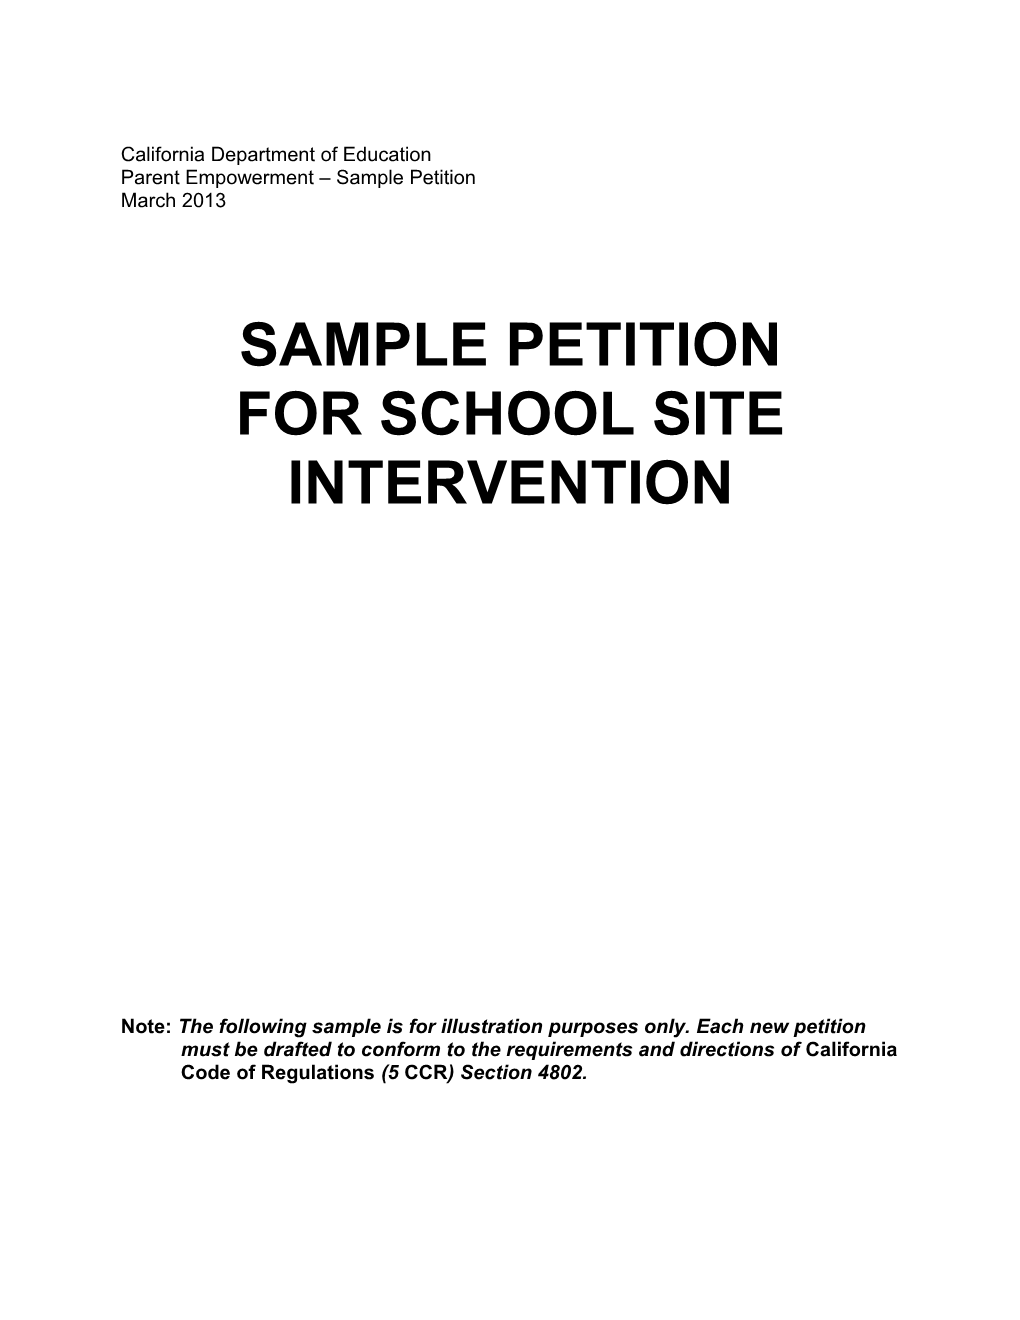 Sample Petition for School Site Intervention - Parent Empowerment (CA Dept of Education)